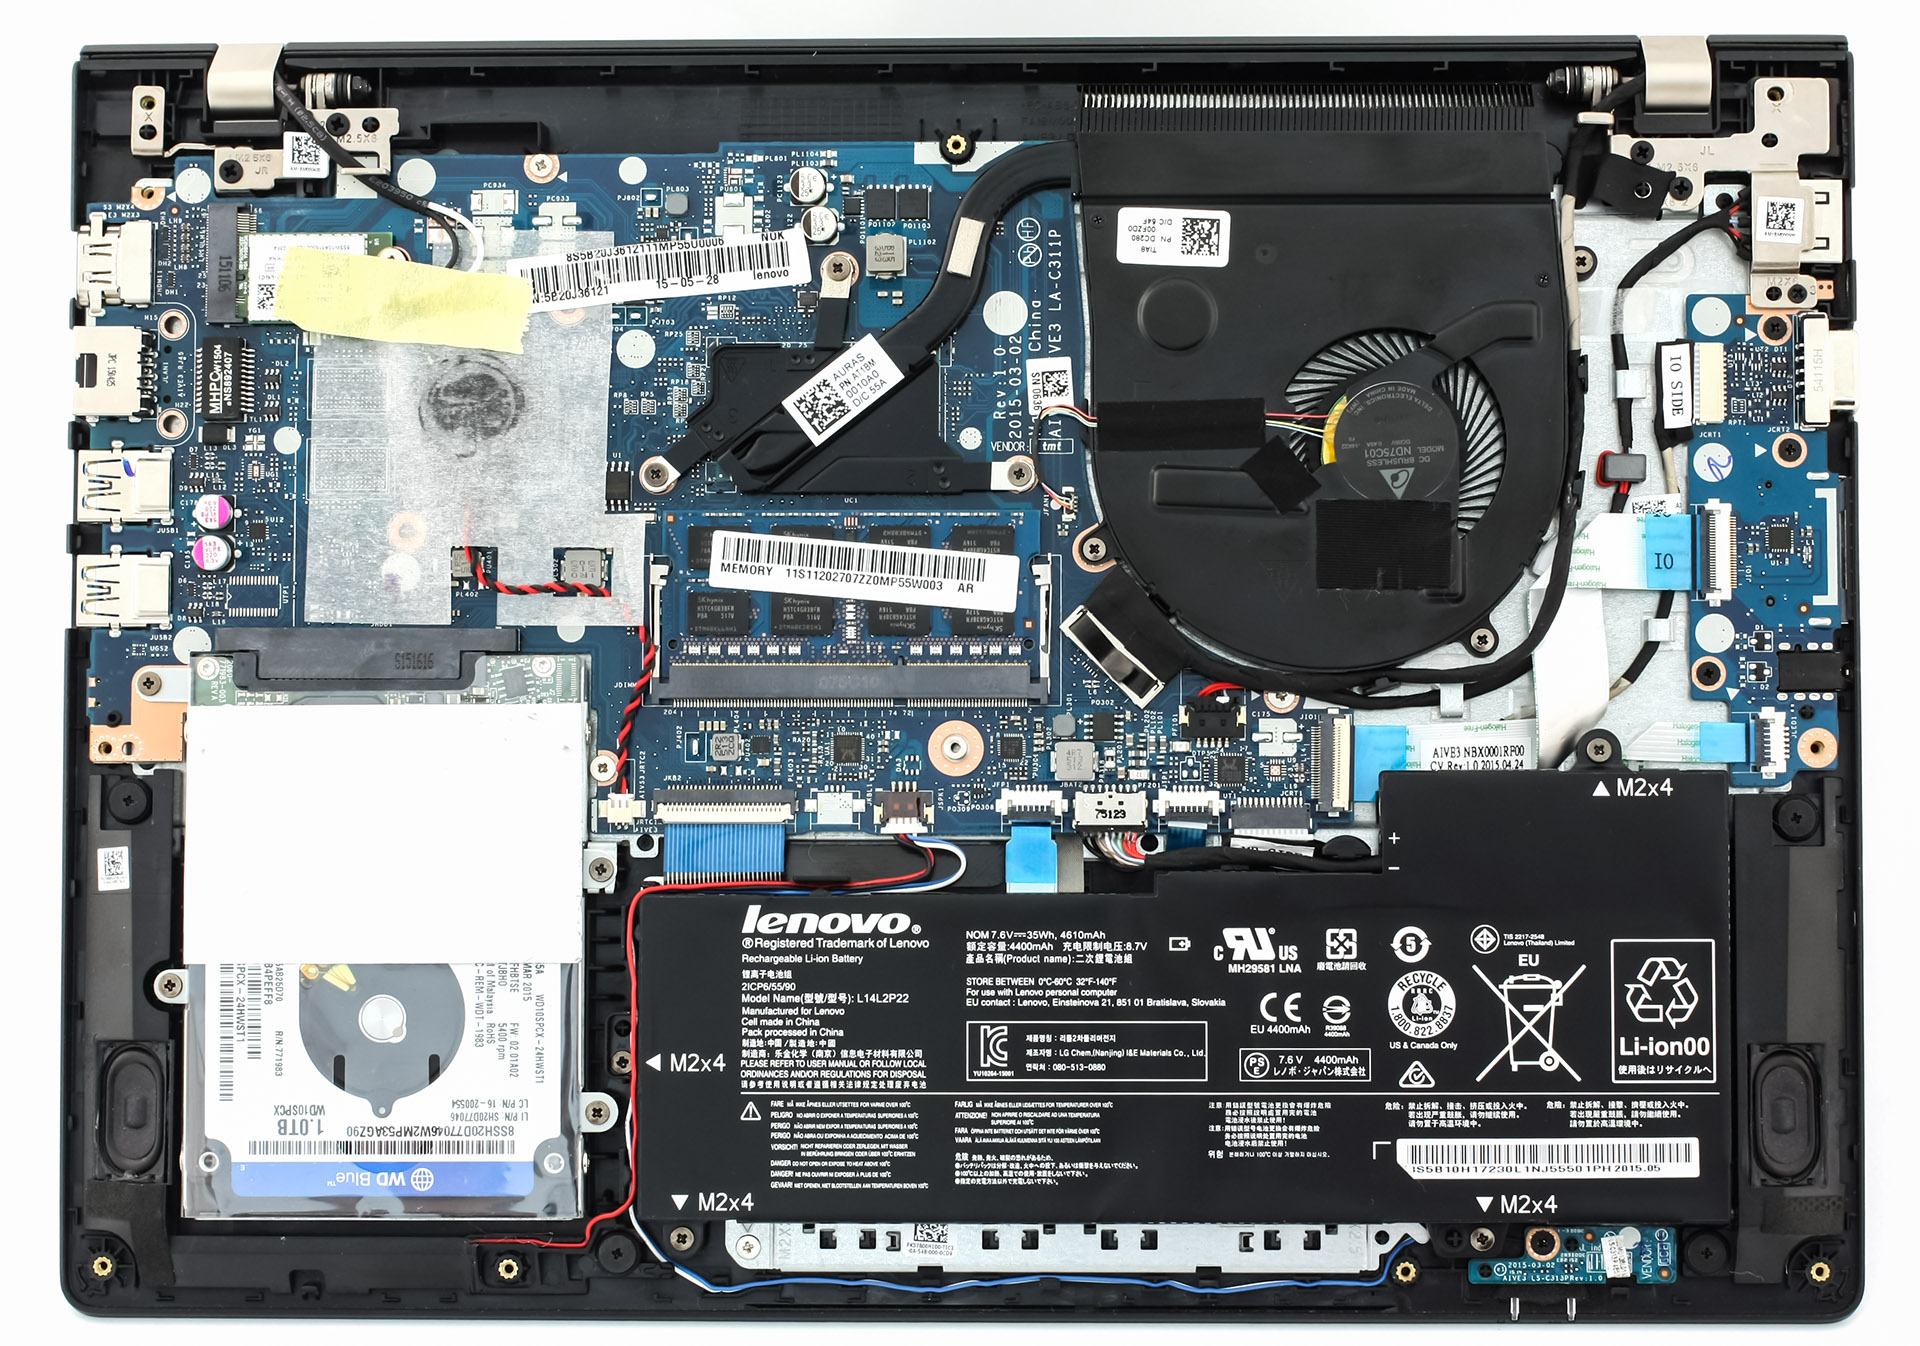 Lenovo E31 Notebook review - 'affordable' mean 'poor quality' | LaptopMedia.com